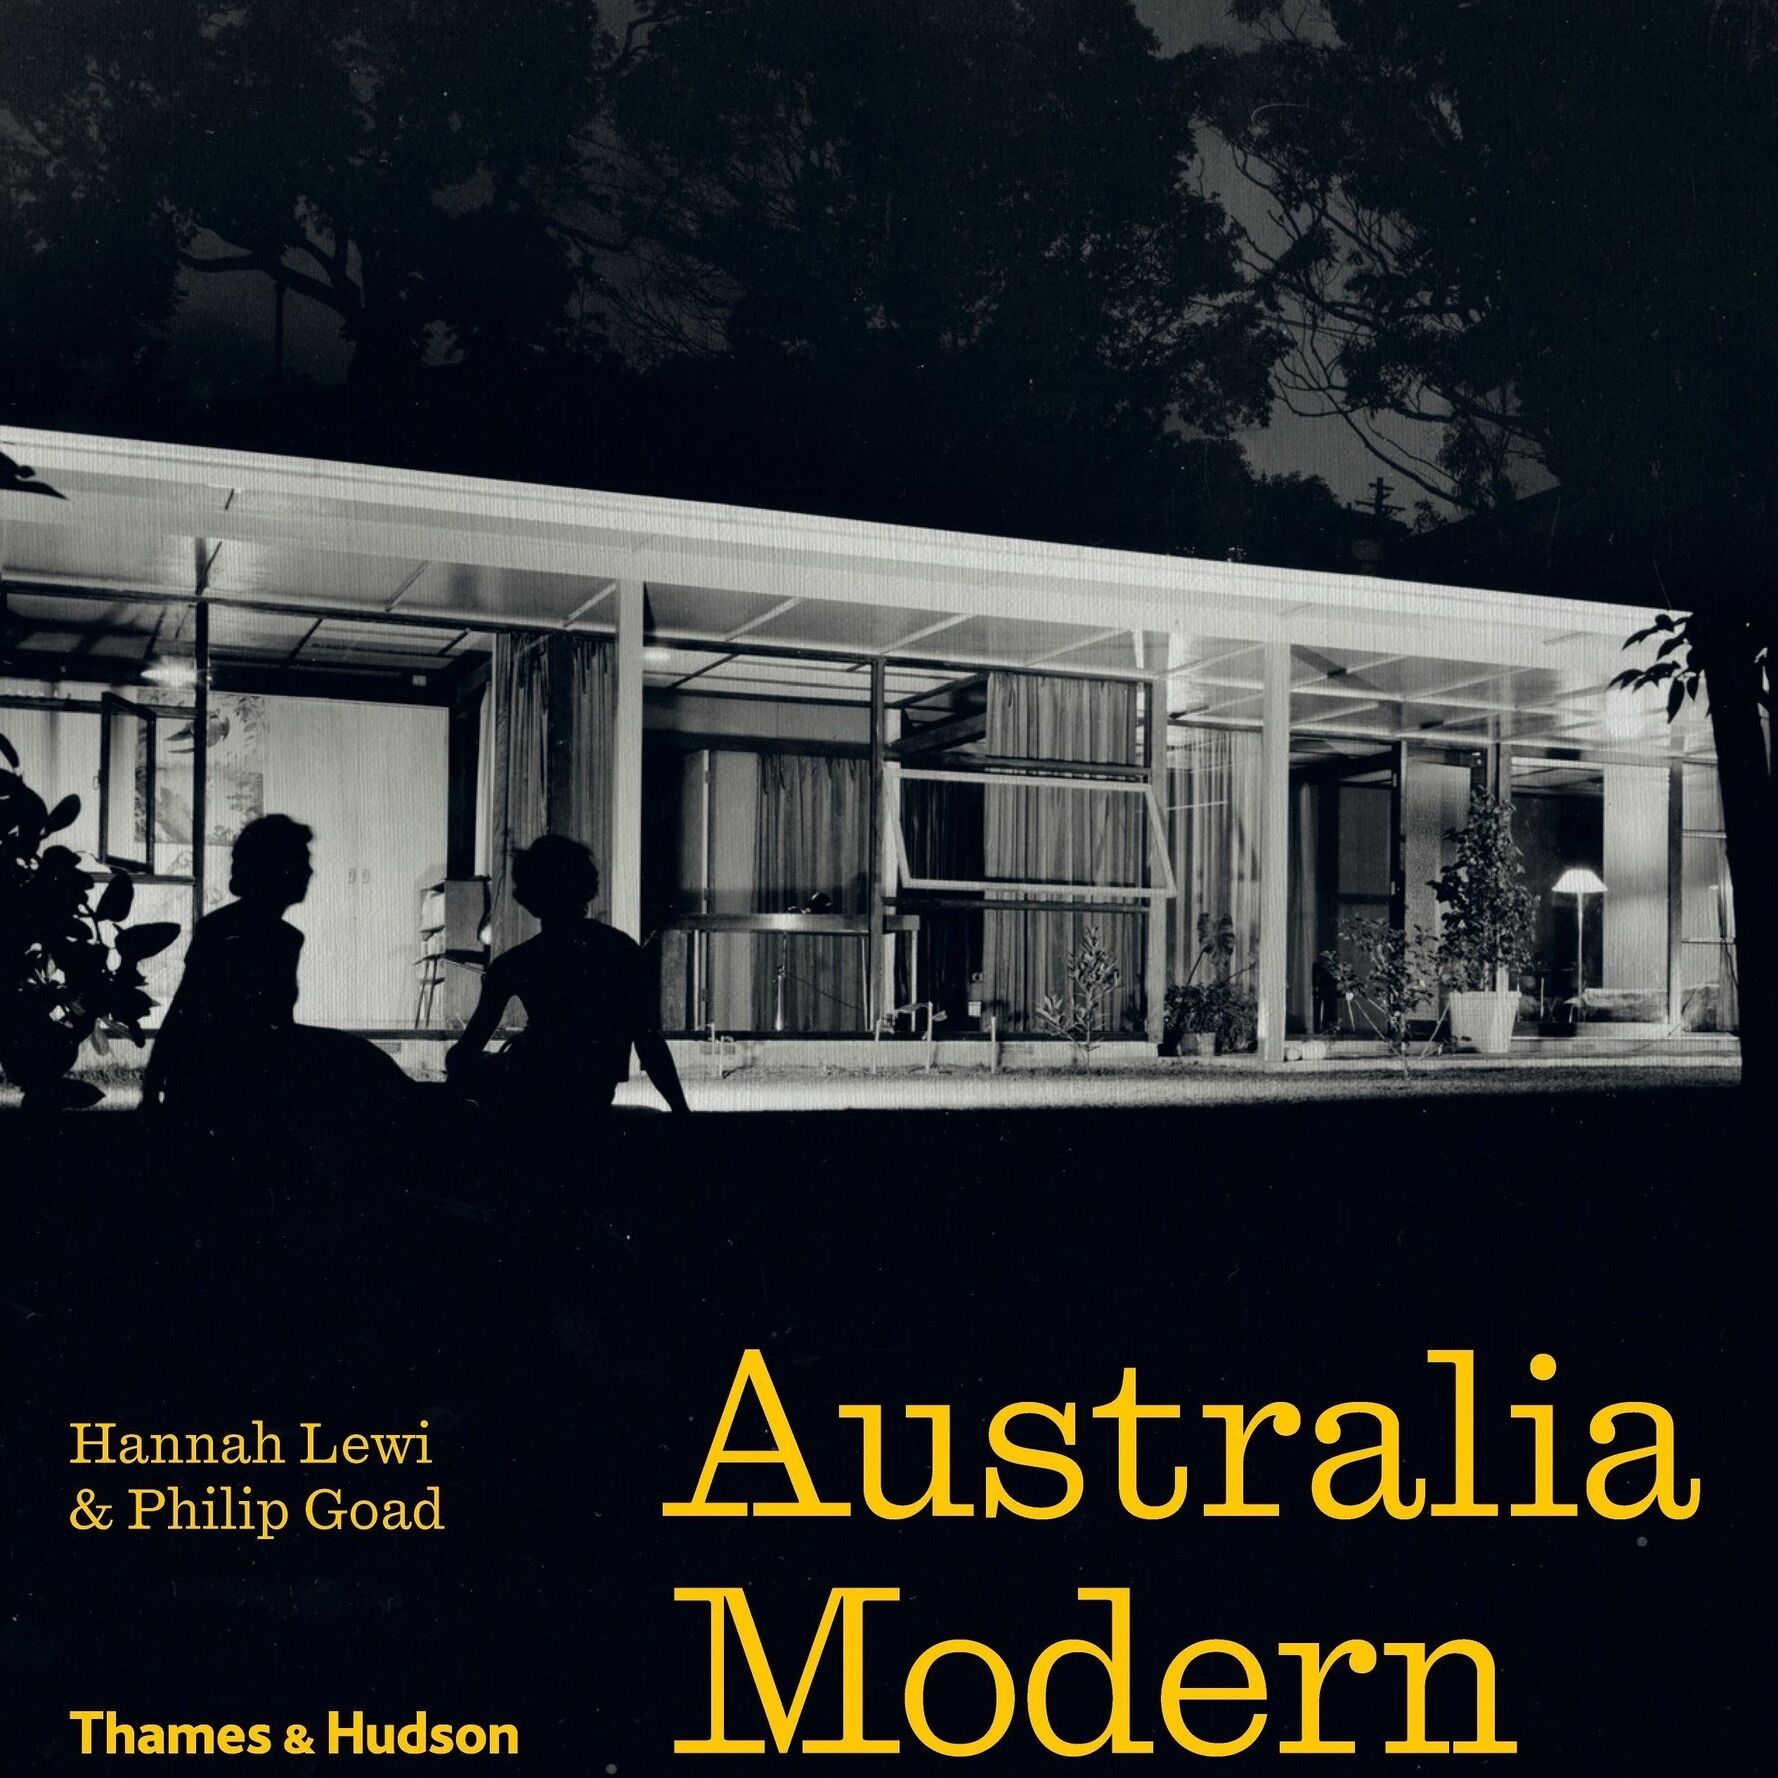 Book: Australian Modern - Architecture, Landscape & Design 1925-1975